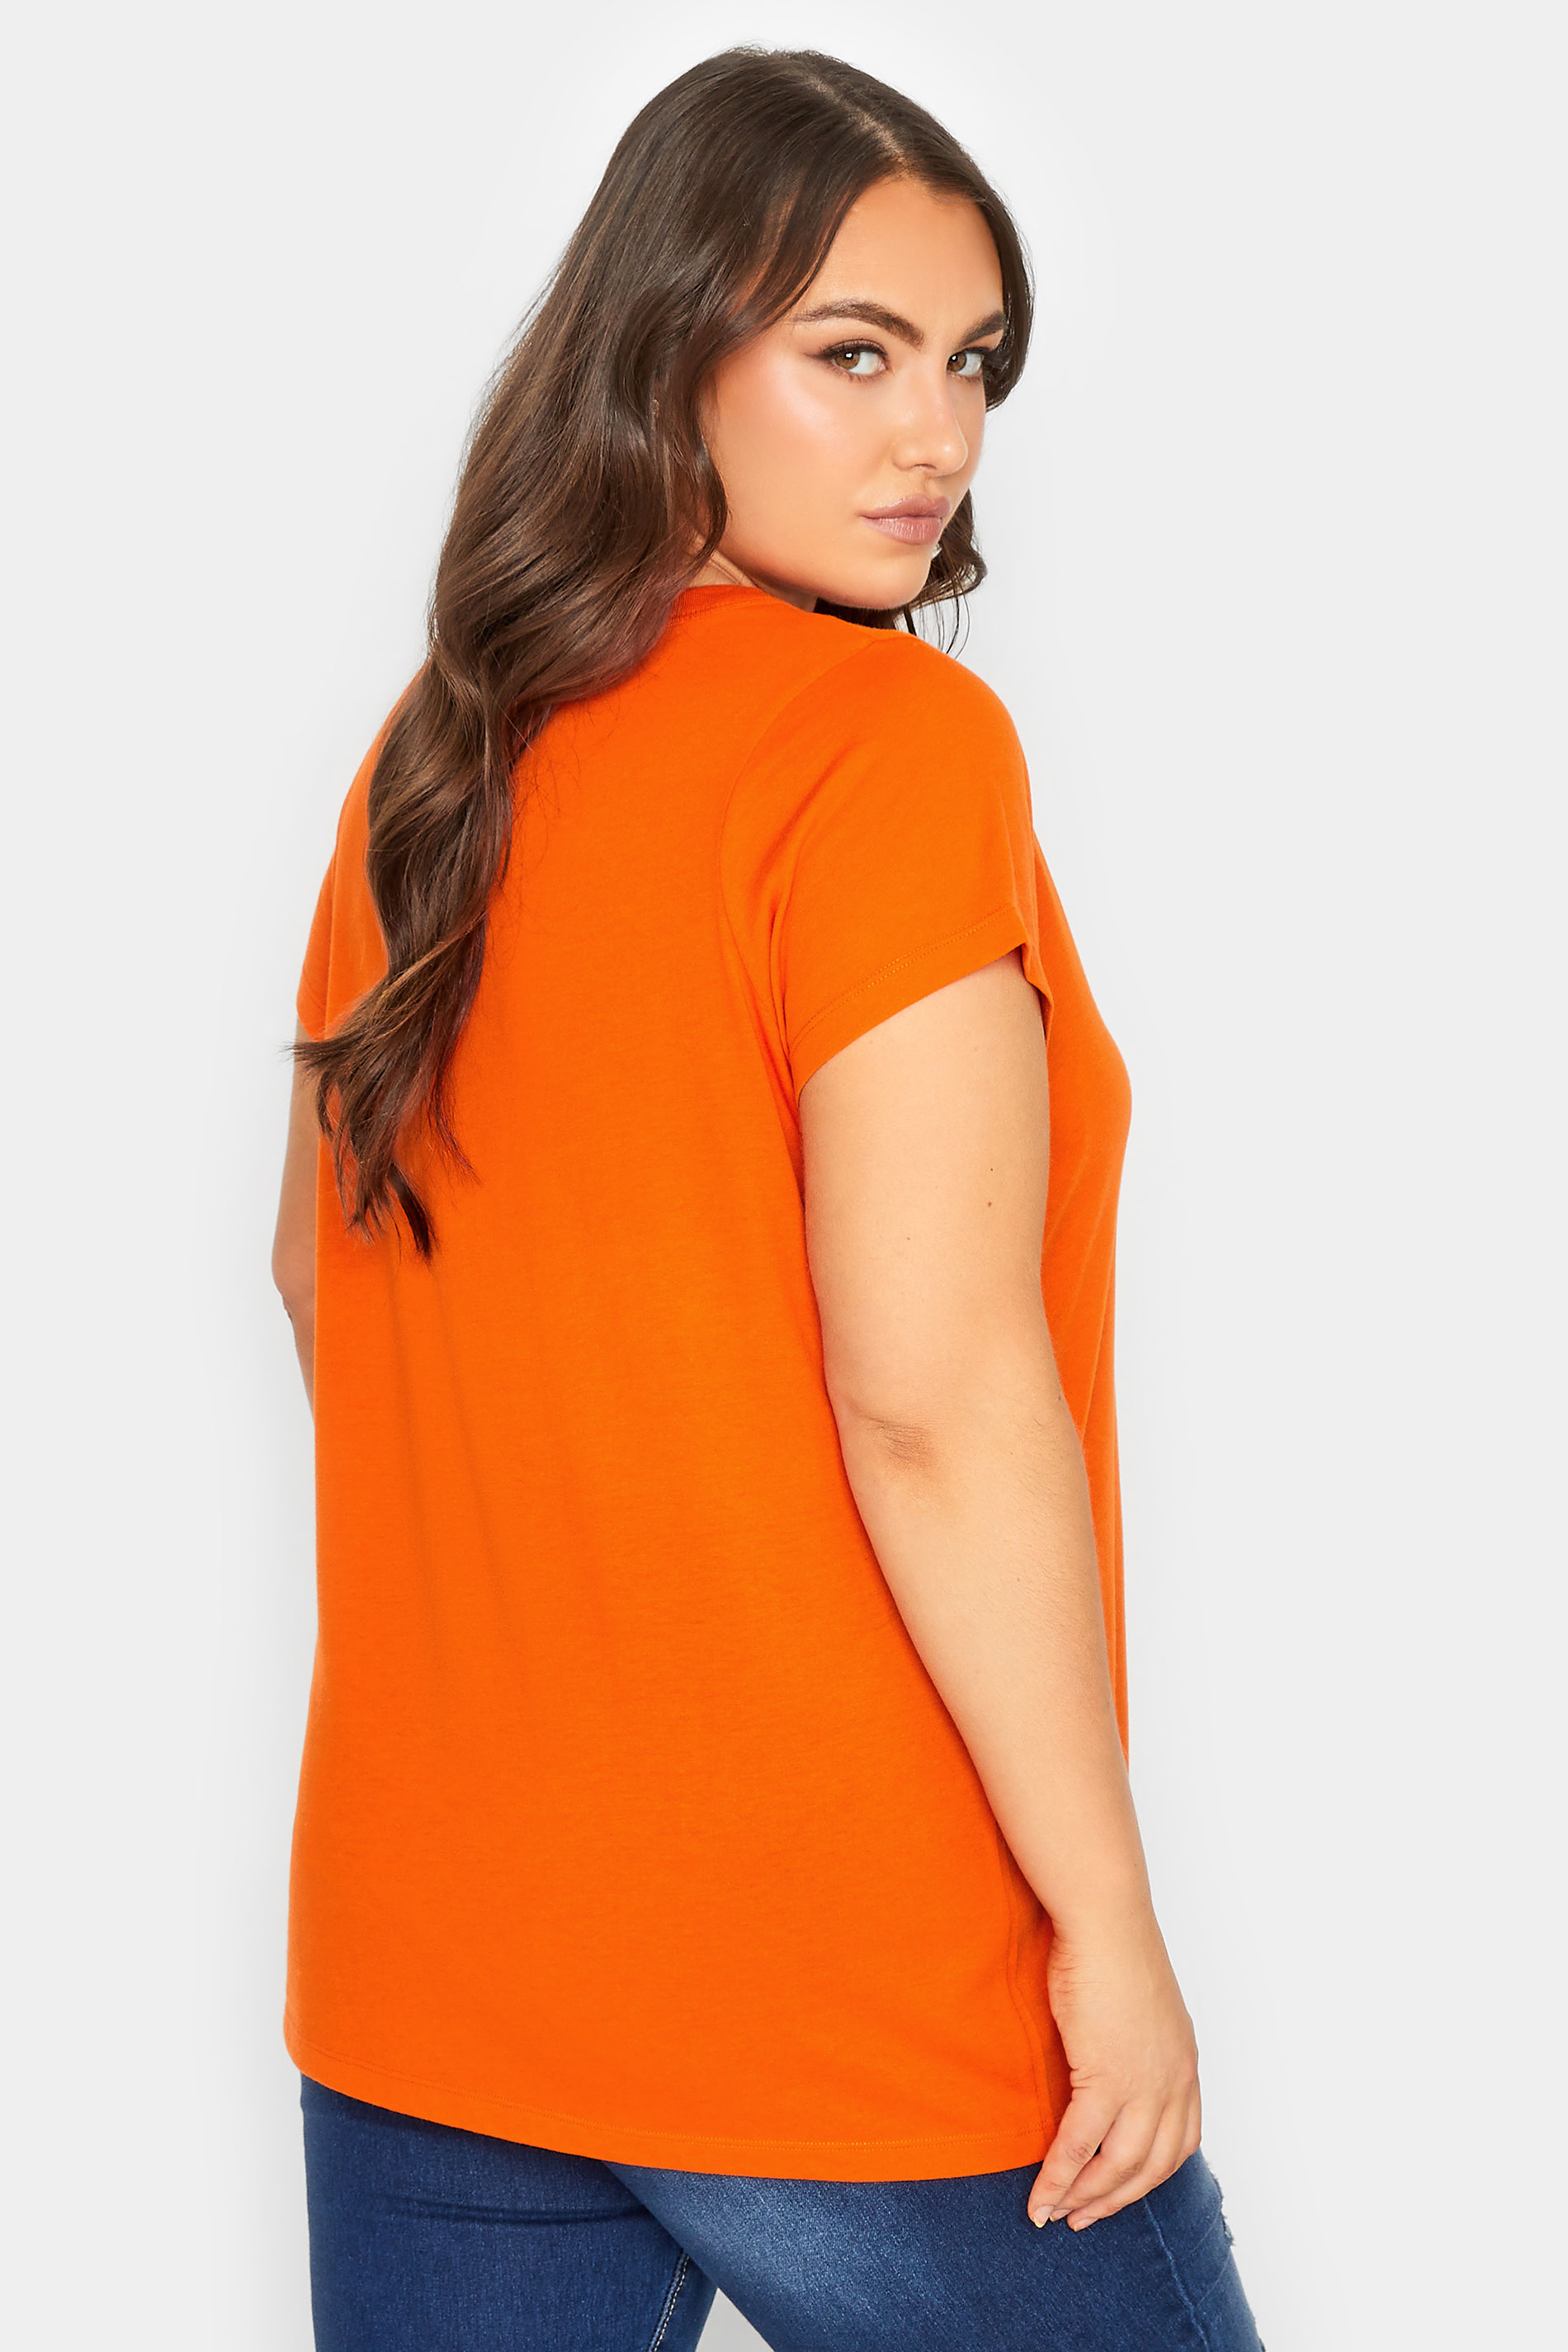 YOURS Plus Size Rust Orange T-Shirt  Orange t shirts, Plus size, Curves  fashion